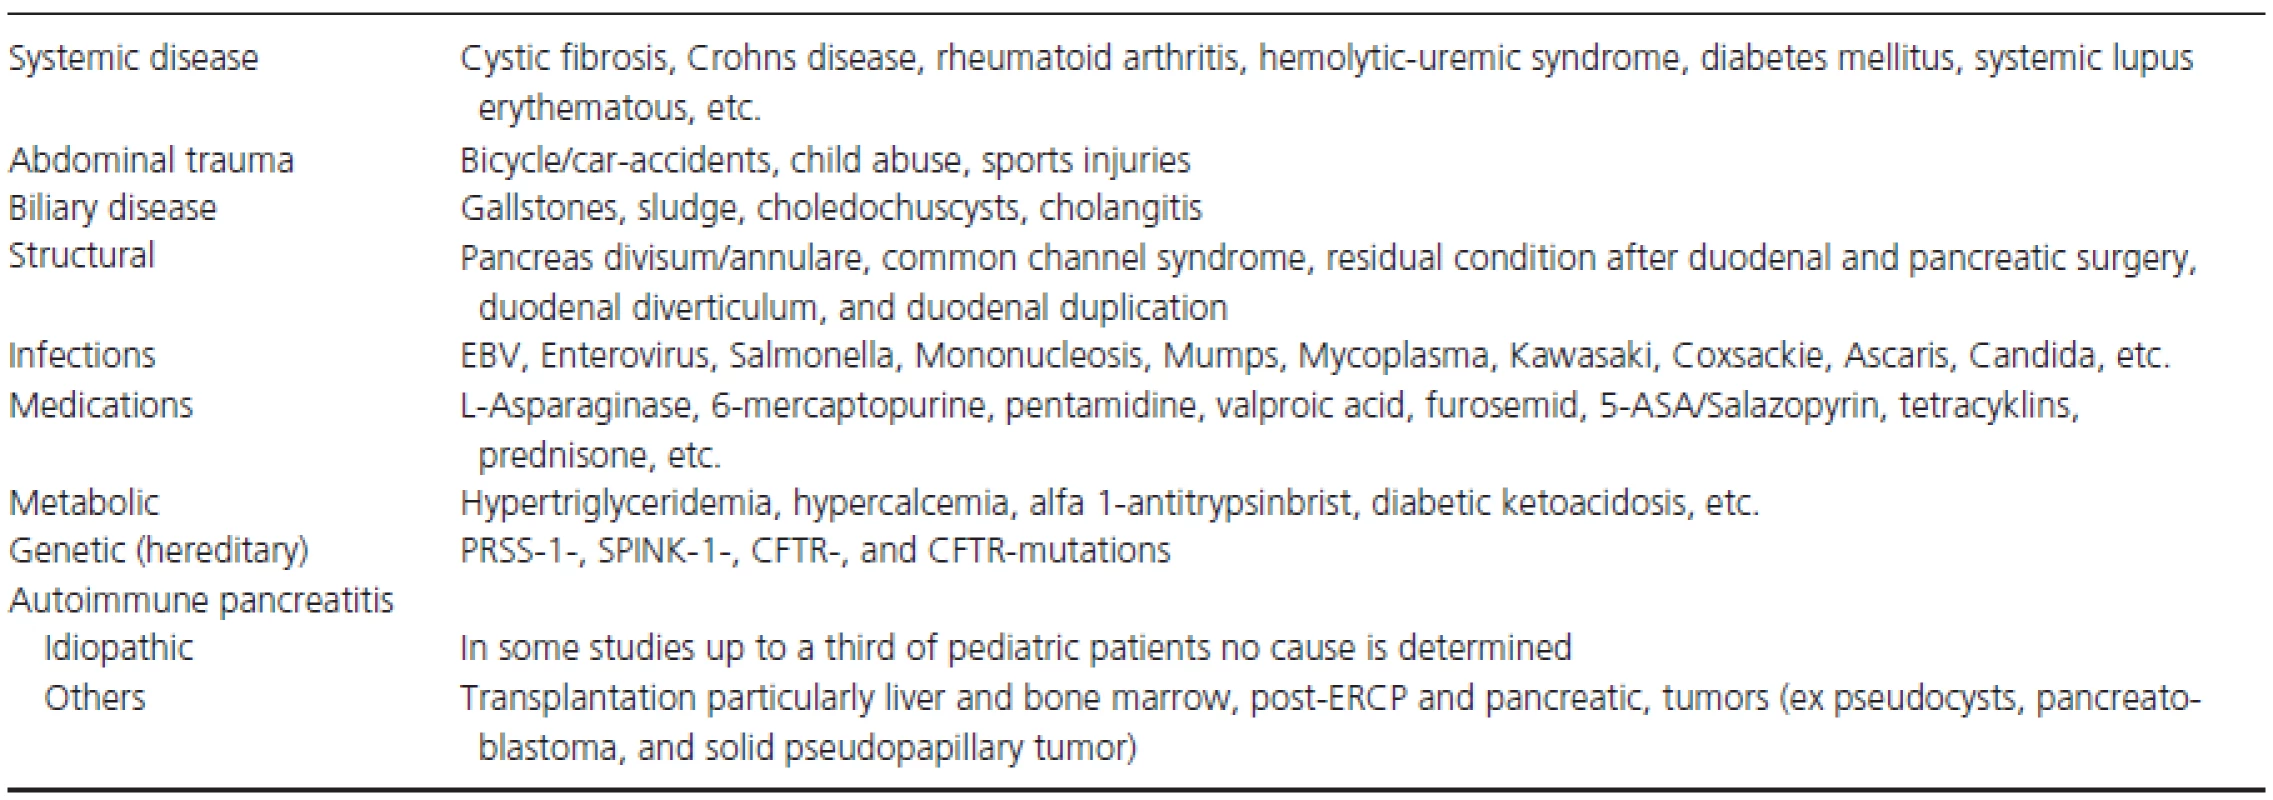 Etiologies of pancreatitis in children and adolescents.